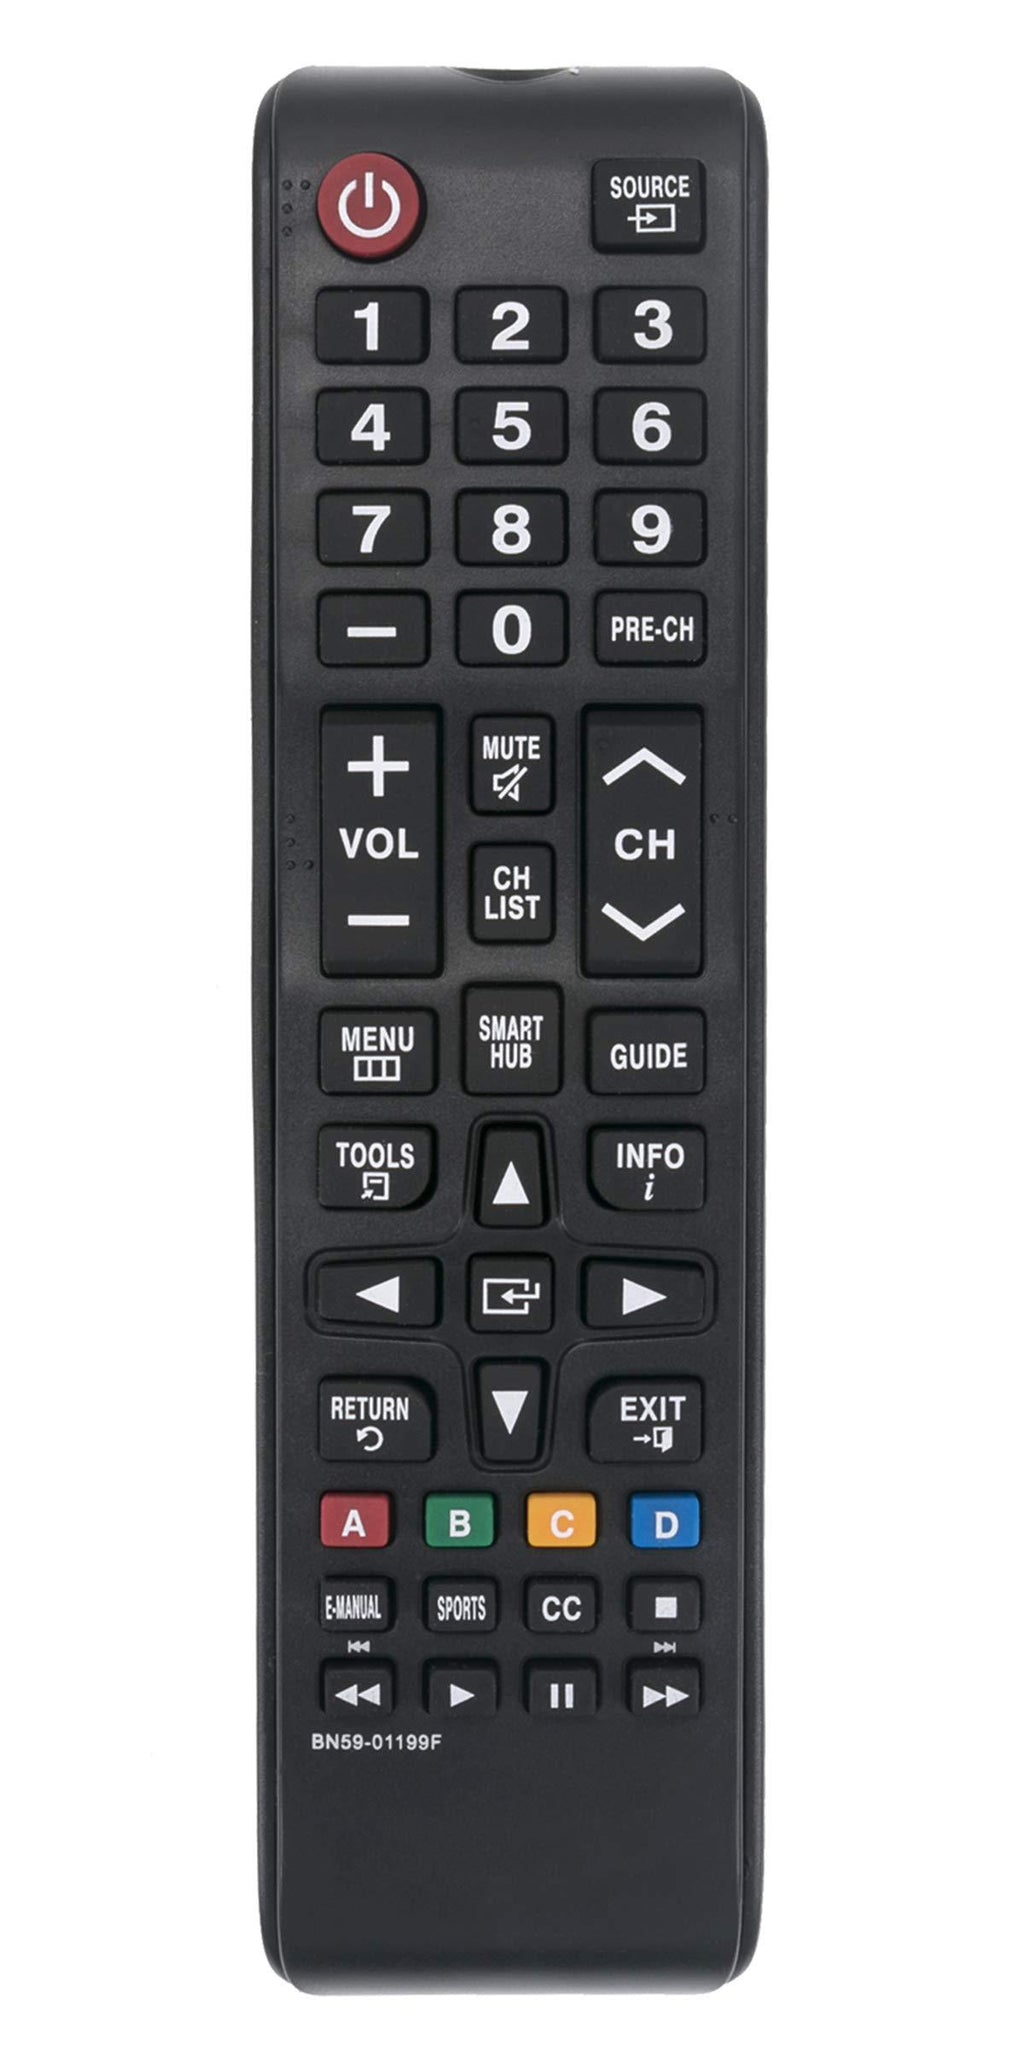 BN59-01199F Replaced Remote Control Compatible with Samsung LED HDTV UN24M4500AFXZA UN28M4500AFXZA UN32J4500AF UN32J4500AFXZA UN32J5205AF UN32J5205AFXZA UN32J5205AFXZC UN32J525DAF UN32J525DAFXZA